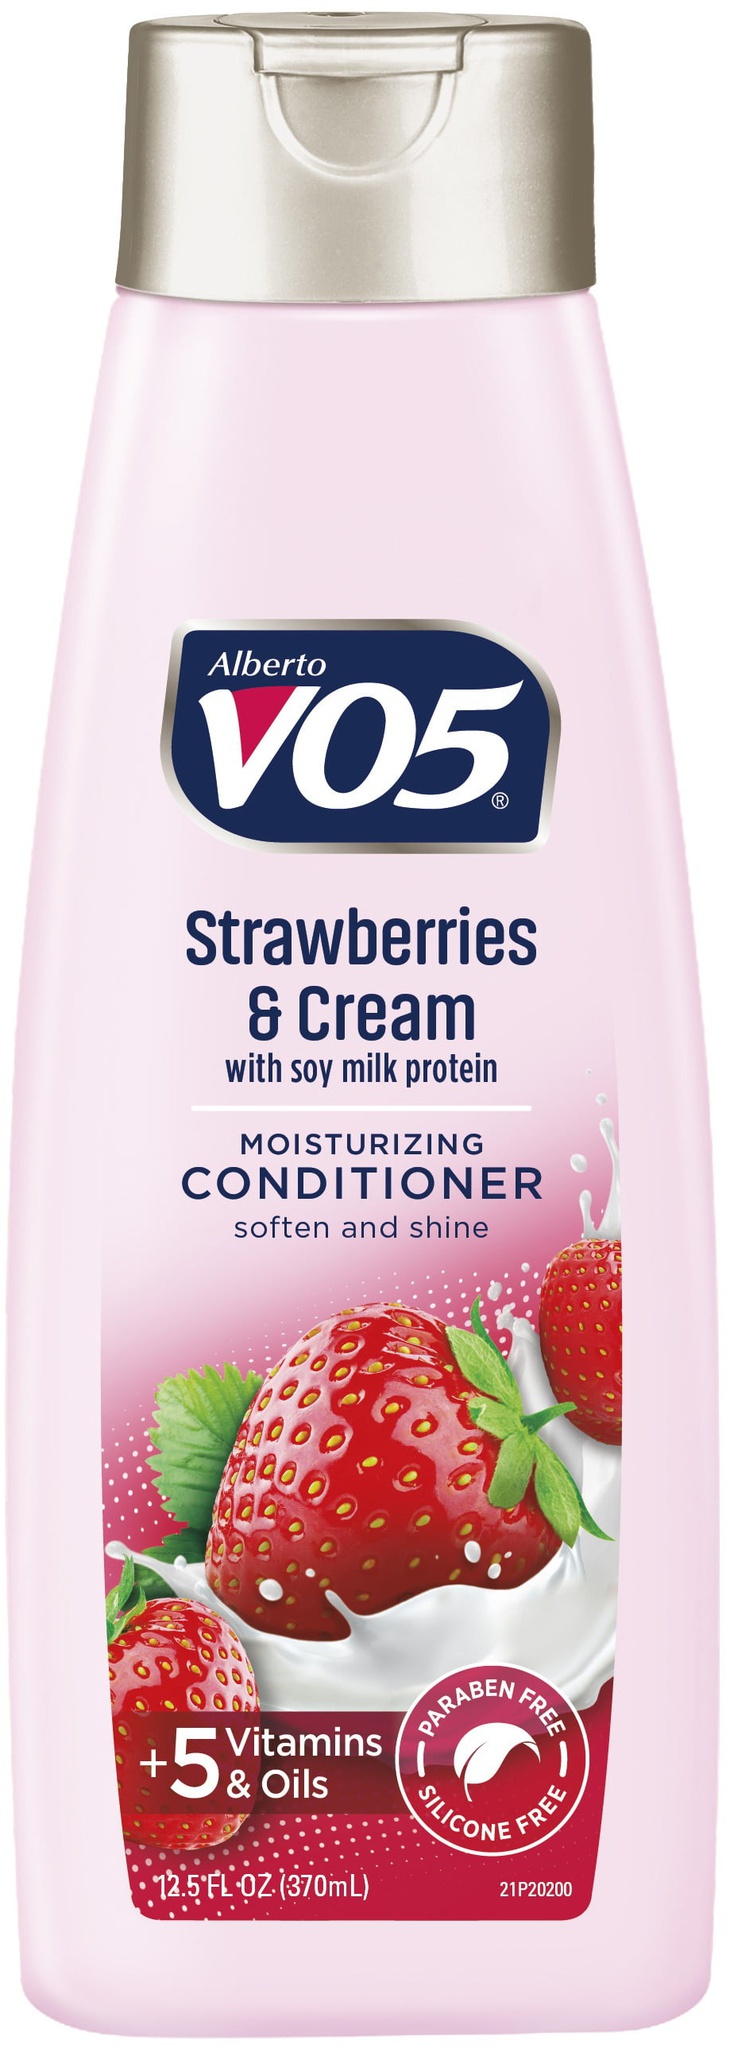 Alberto Vo5 Strawberries & Cream Moisturizing Conditioner